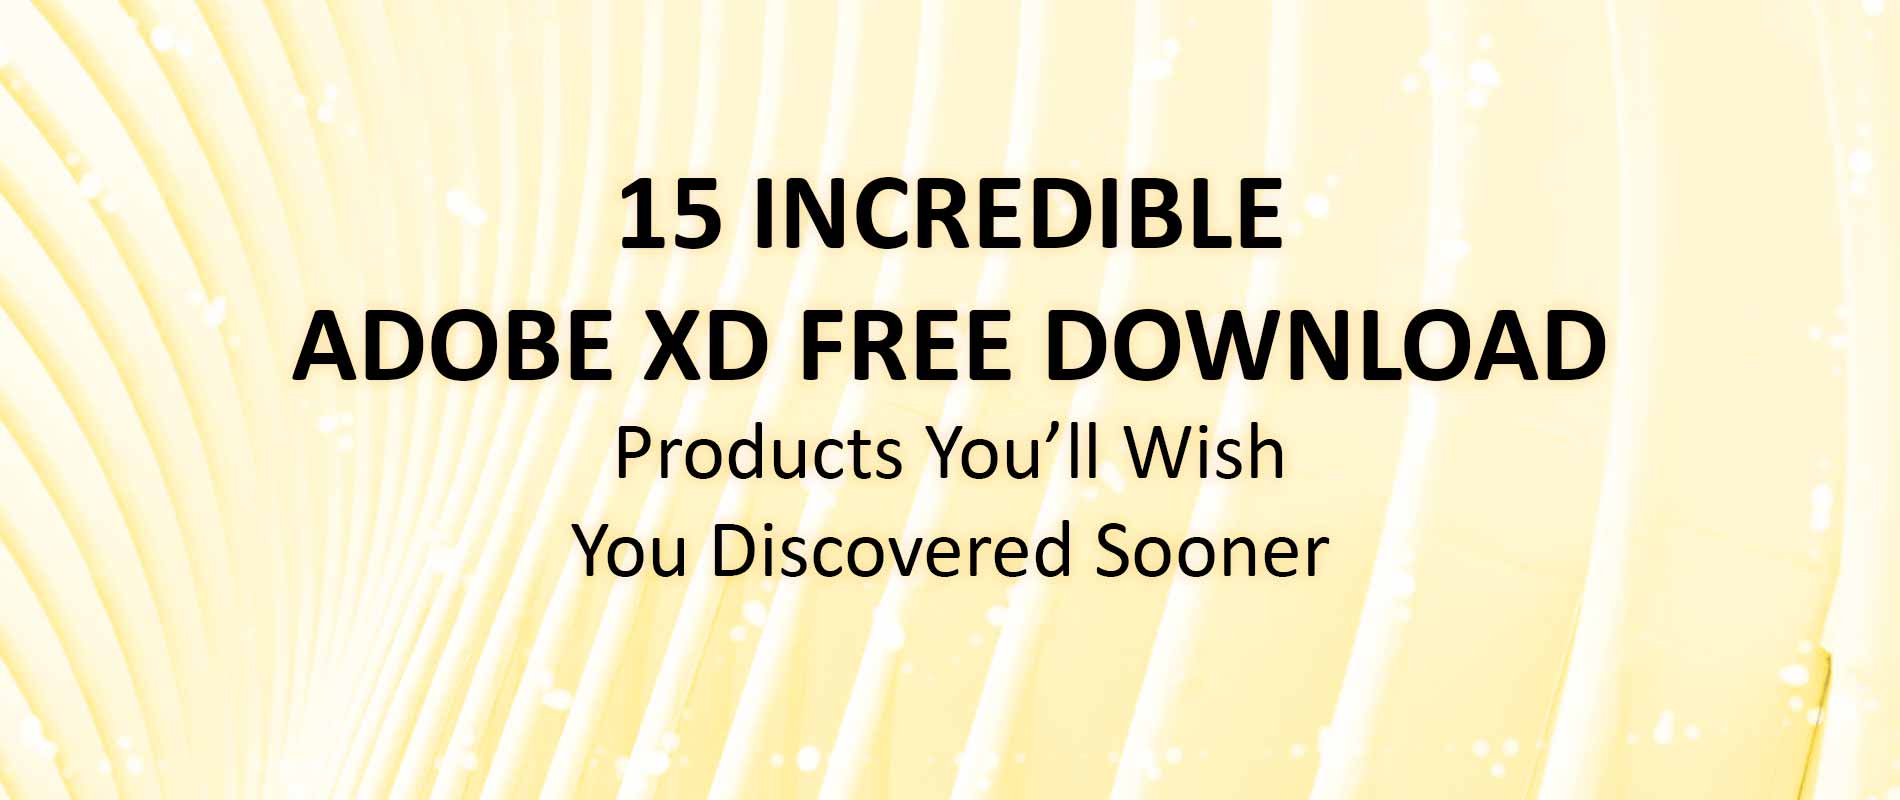 adobe xd download free windows 7